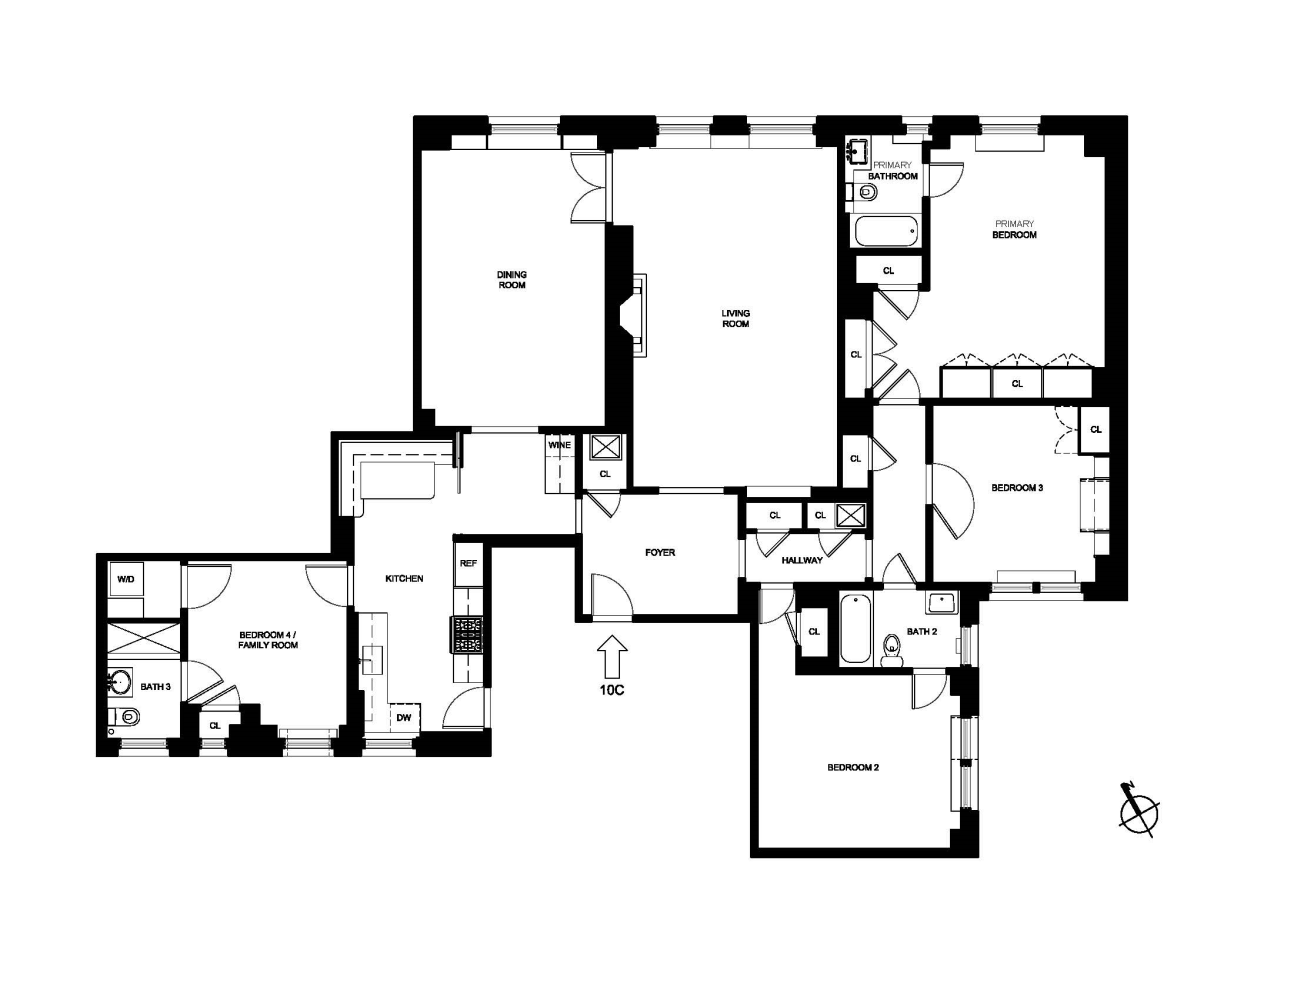 Floorplan for 1165 5th Avenue, 10C